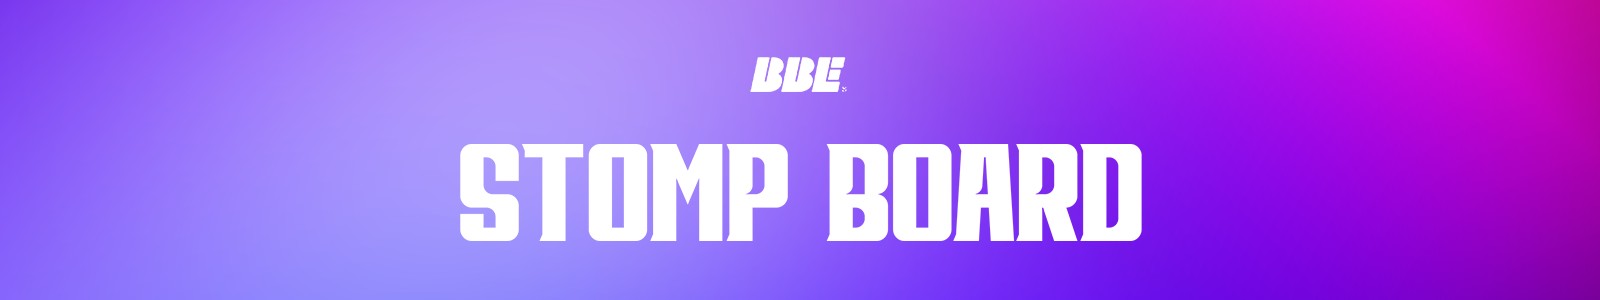 Stomp Board by BBE Sound